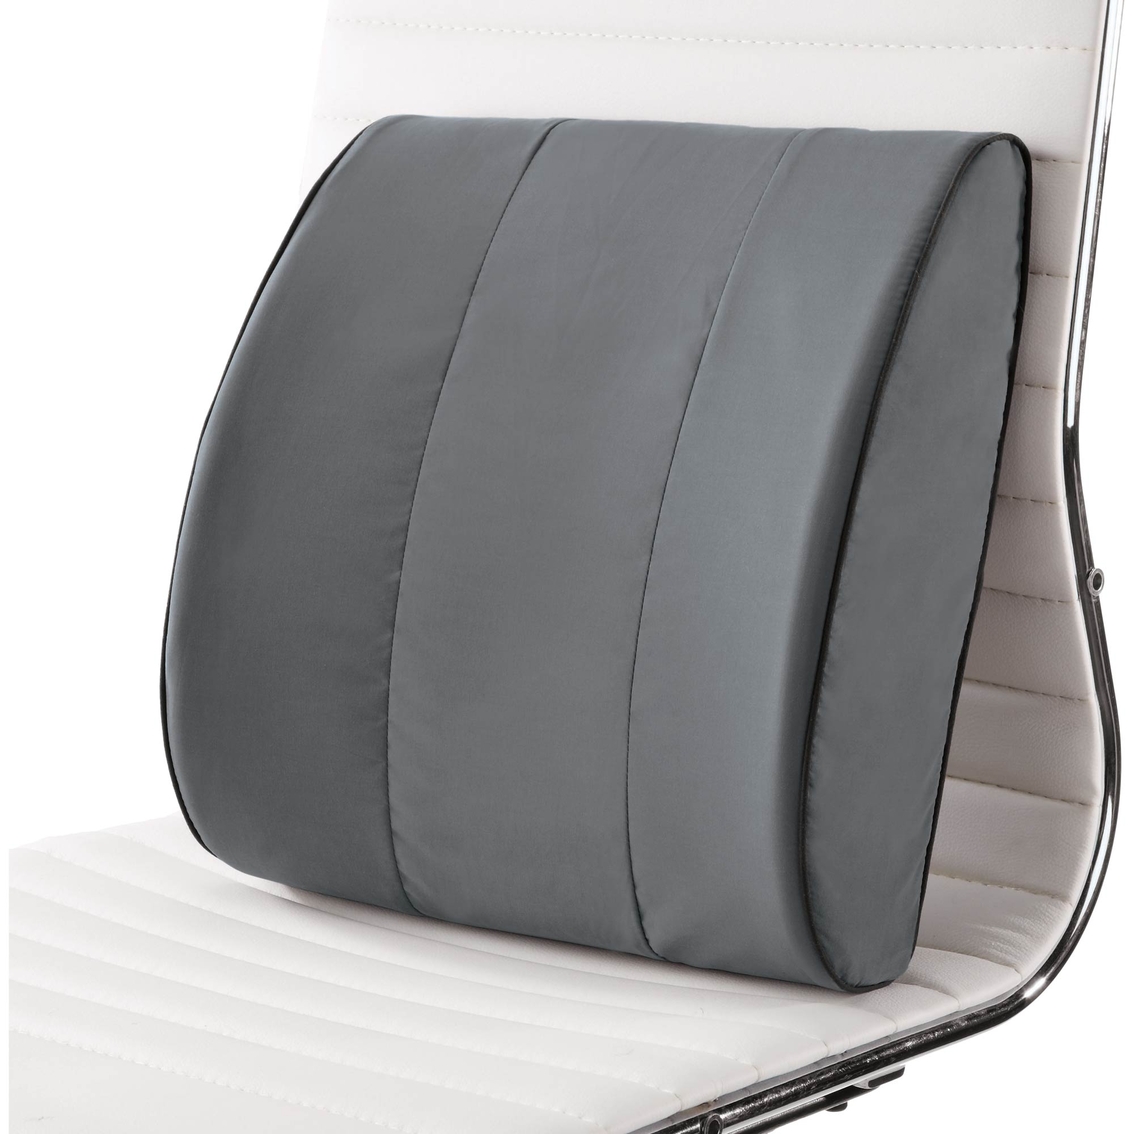 Brookstone Full Back Contoured Lumbar Support Cushion, Pure Memory